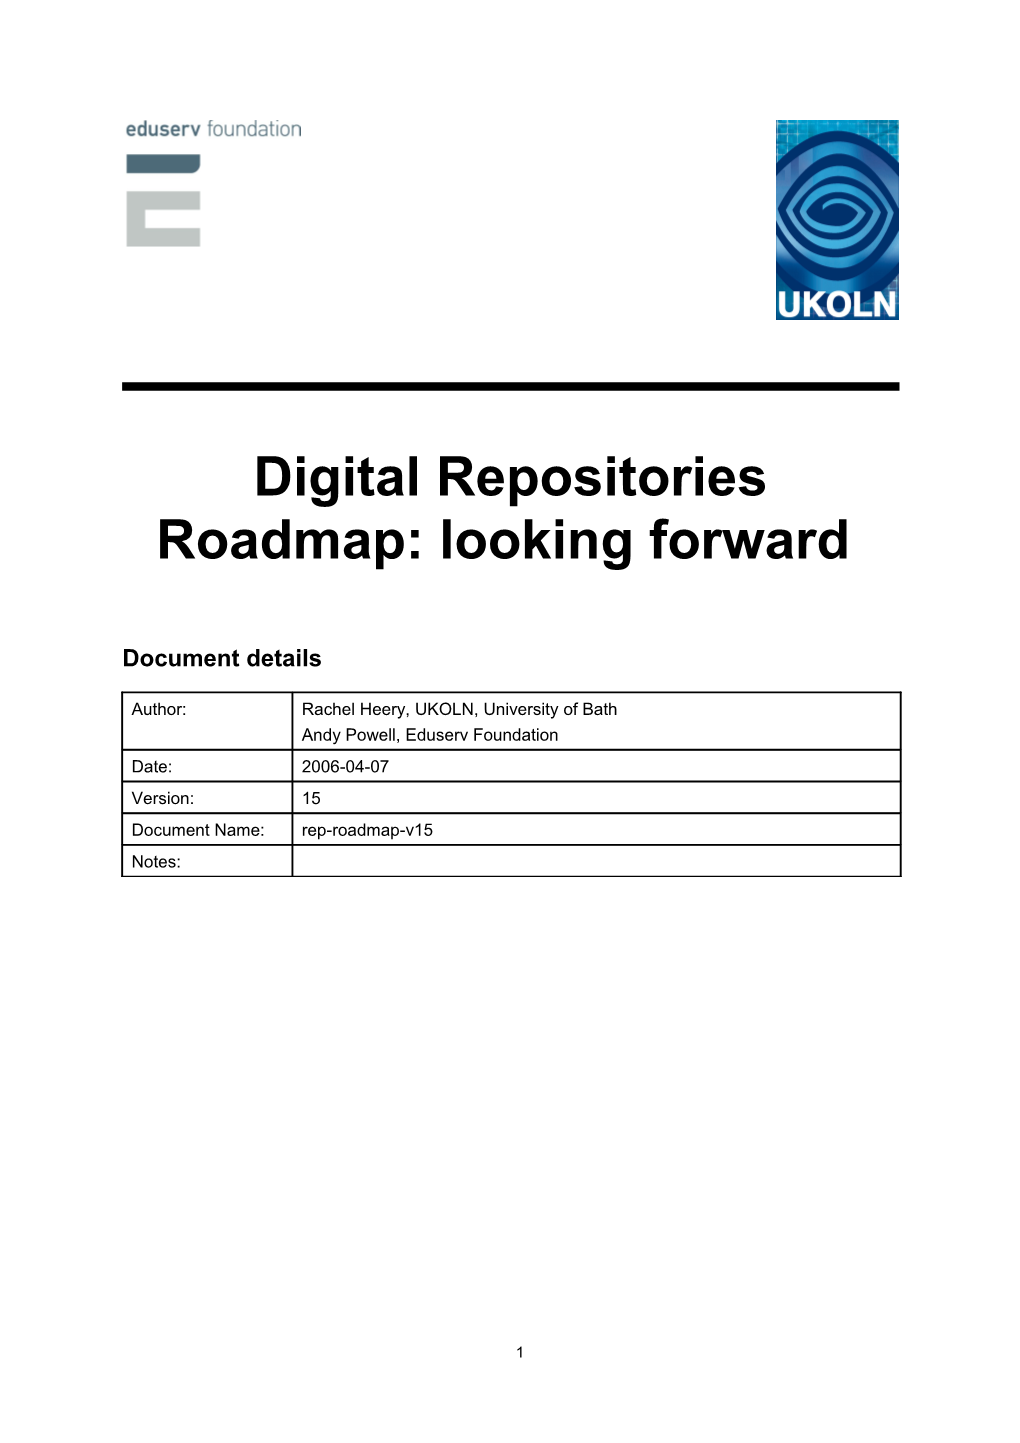 Digital Repositories Roadmap: Looking Forward